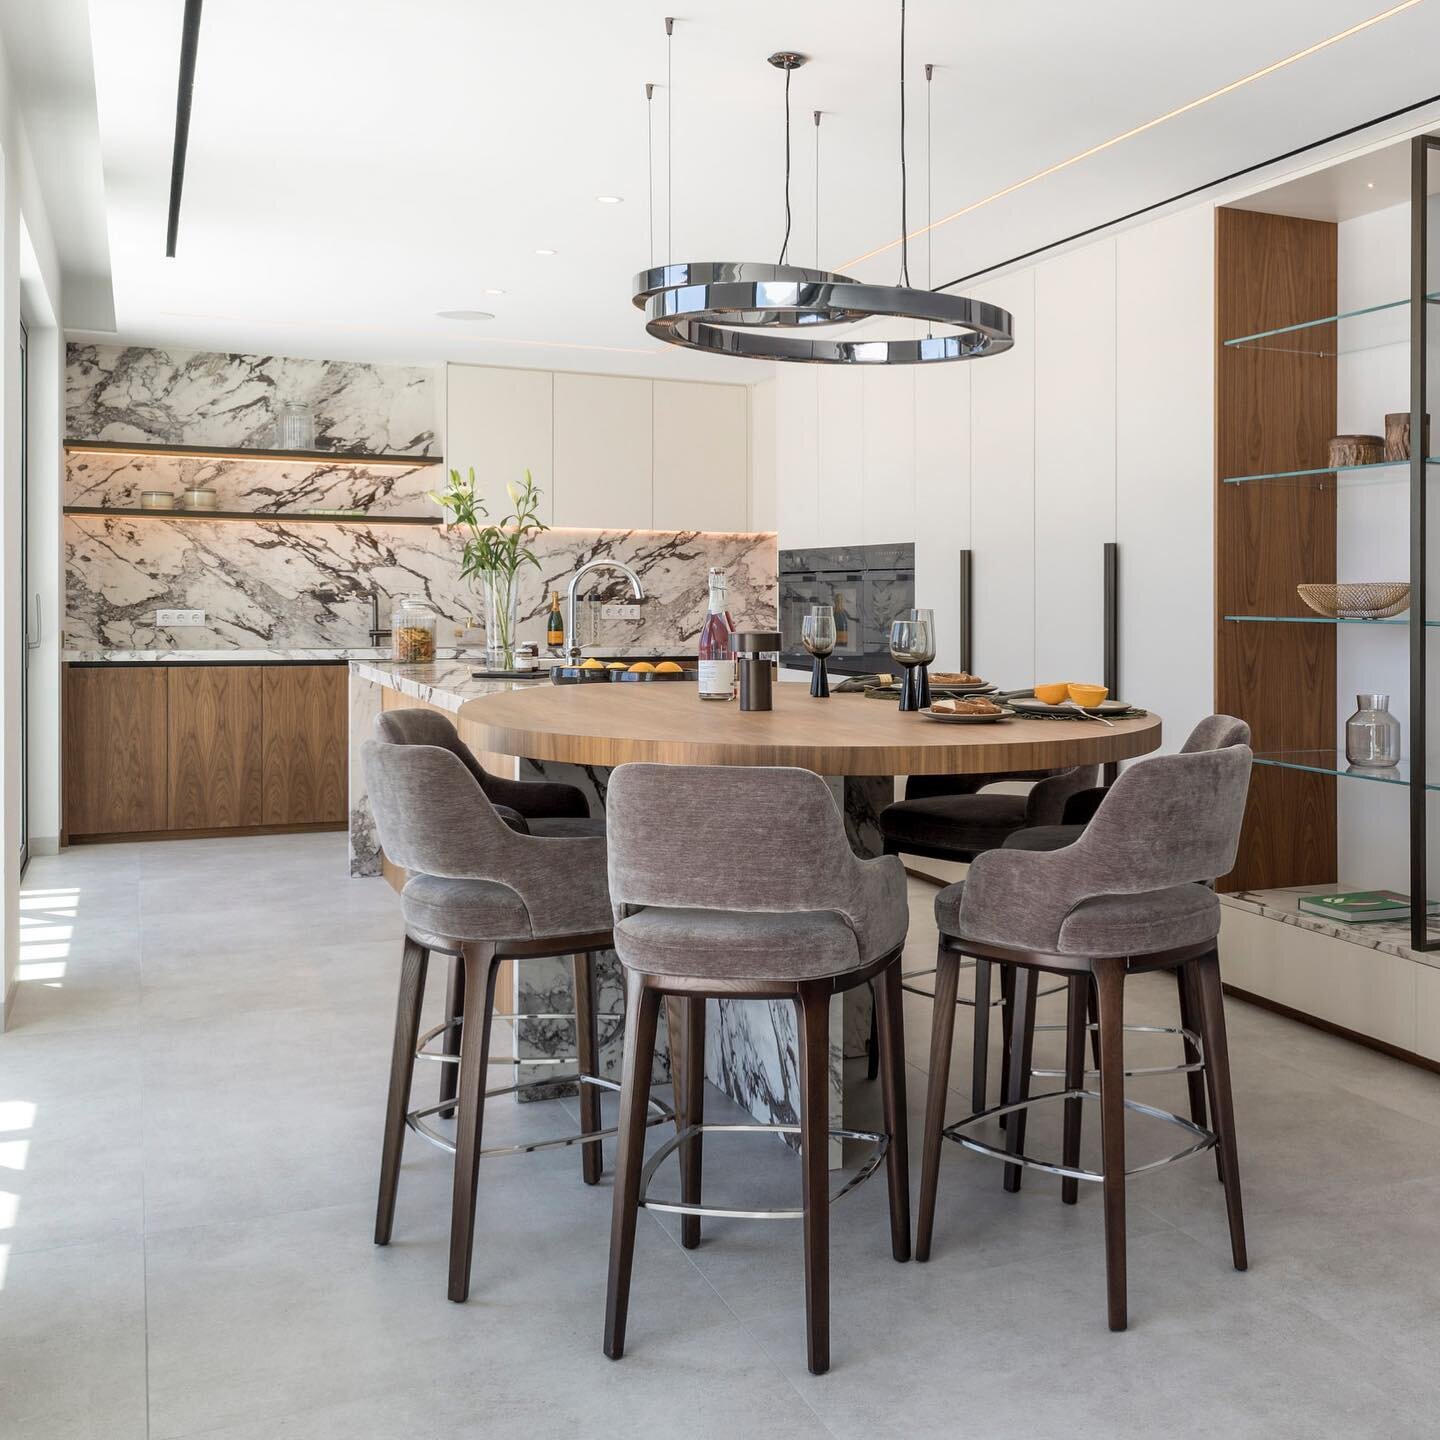 Villa N &bull; Bespoke Kitchen Design by @vanderbuiltdesigngroup #interiorarchitecture #interiordesign #vanderbuilt #kitchen #luxurylifestyle #quintadolago #integratedsolutions #luxuryproperty #uniquehomes